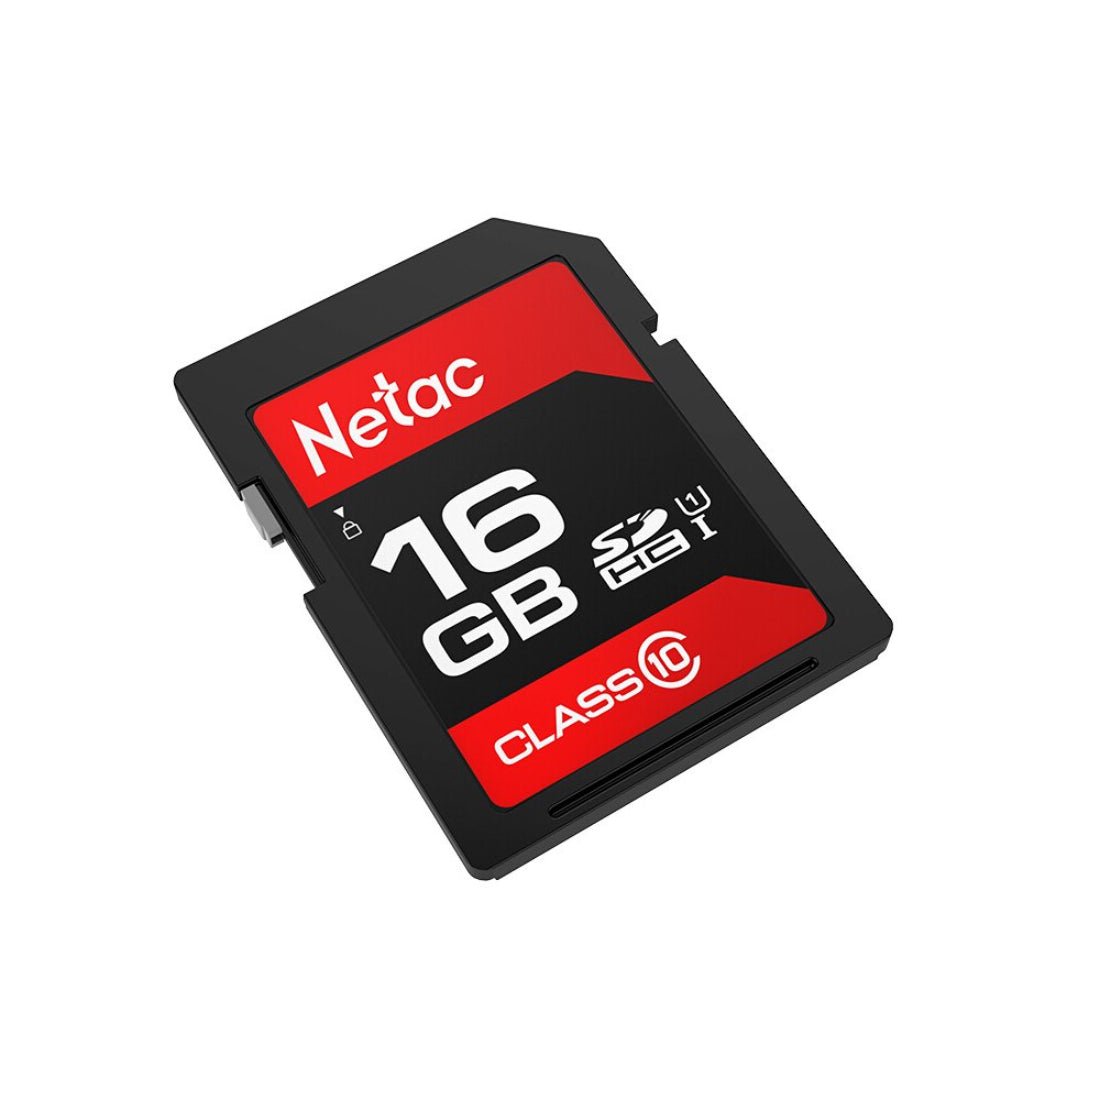 Netac P600 16GB 80MB/s MicroSDHC - مساحة تخزين - Store 974 | ستور ٩٧٤